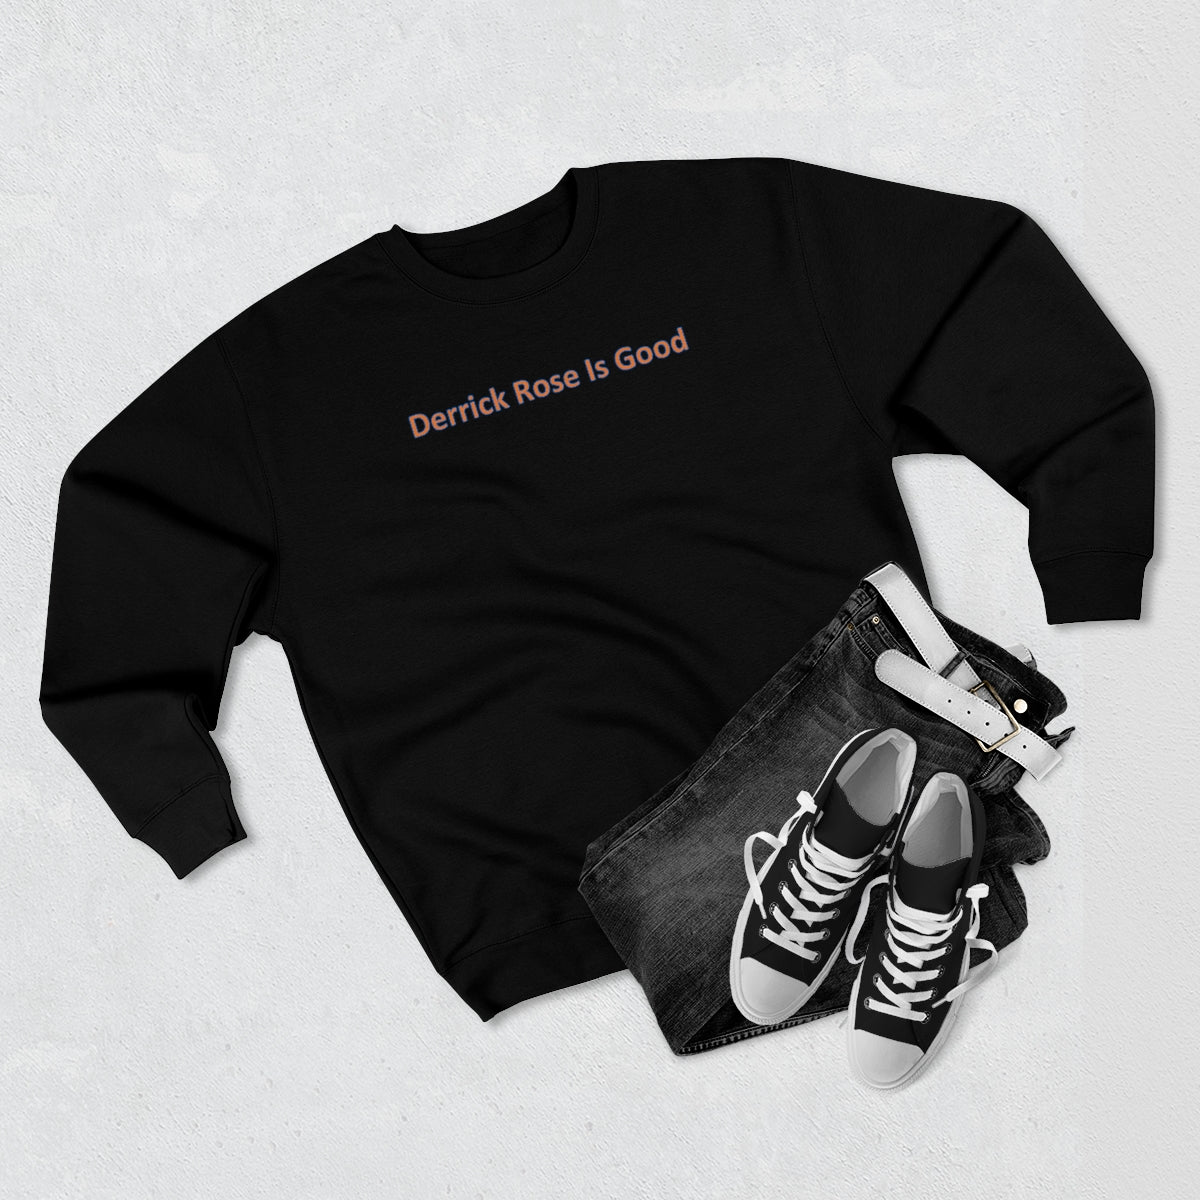 Derrick Rose Is Good Unisex Premium Crewneck Sweatshirt - IsGoodBrand